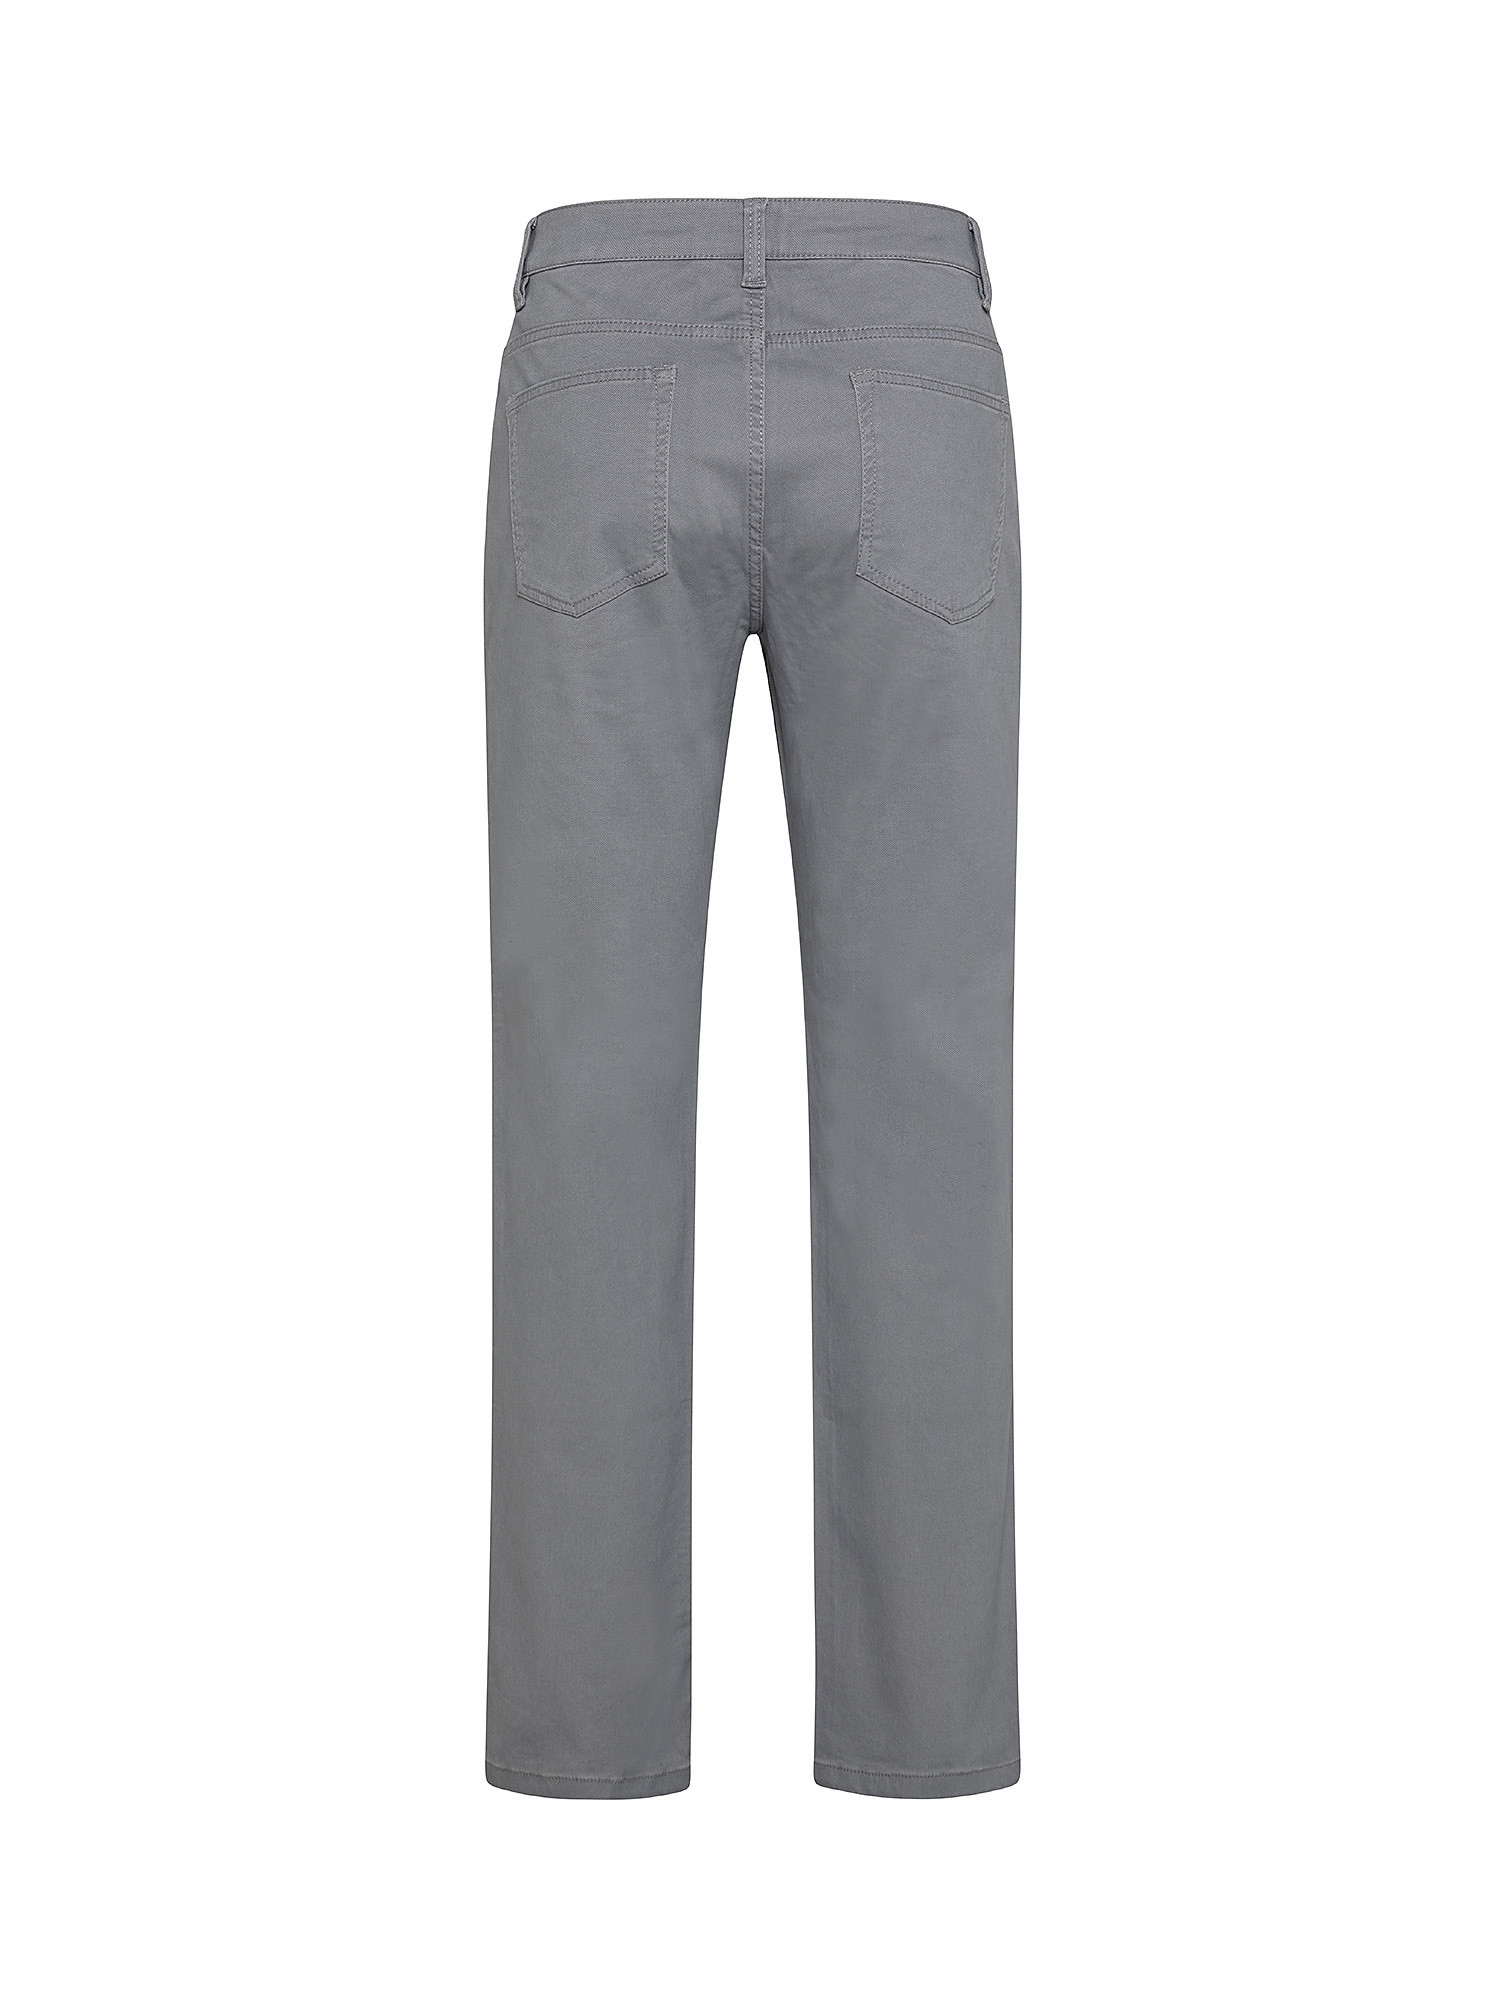 Pantalone cinque tasche slim comfort fit in cotone elasticizzato, Grigio chiaro, large image number 1